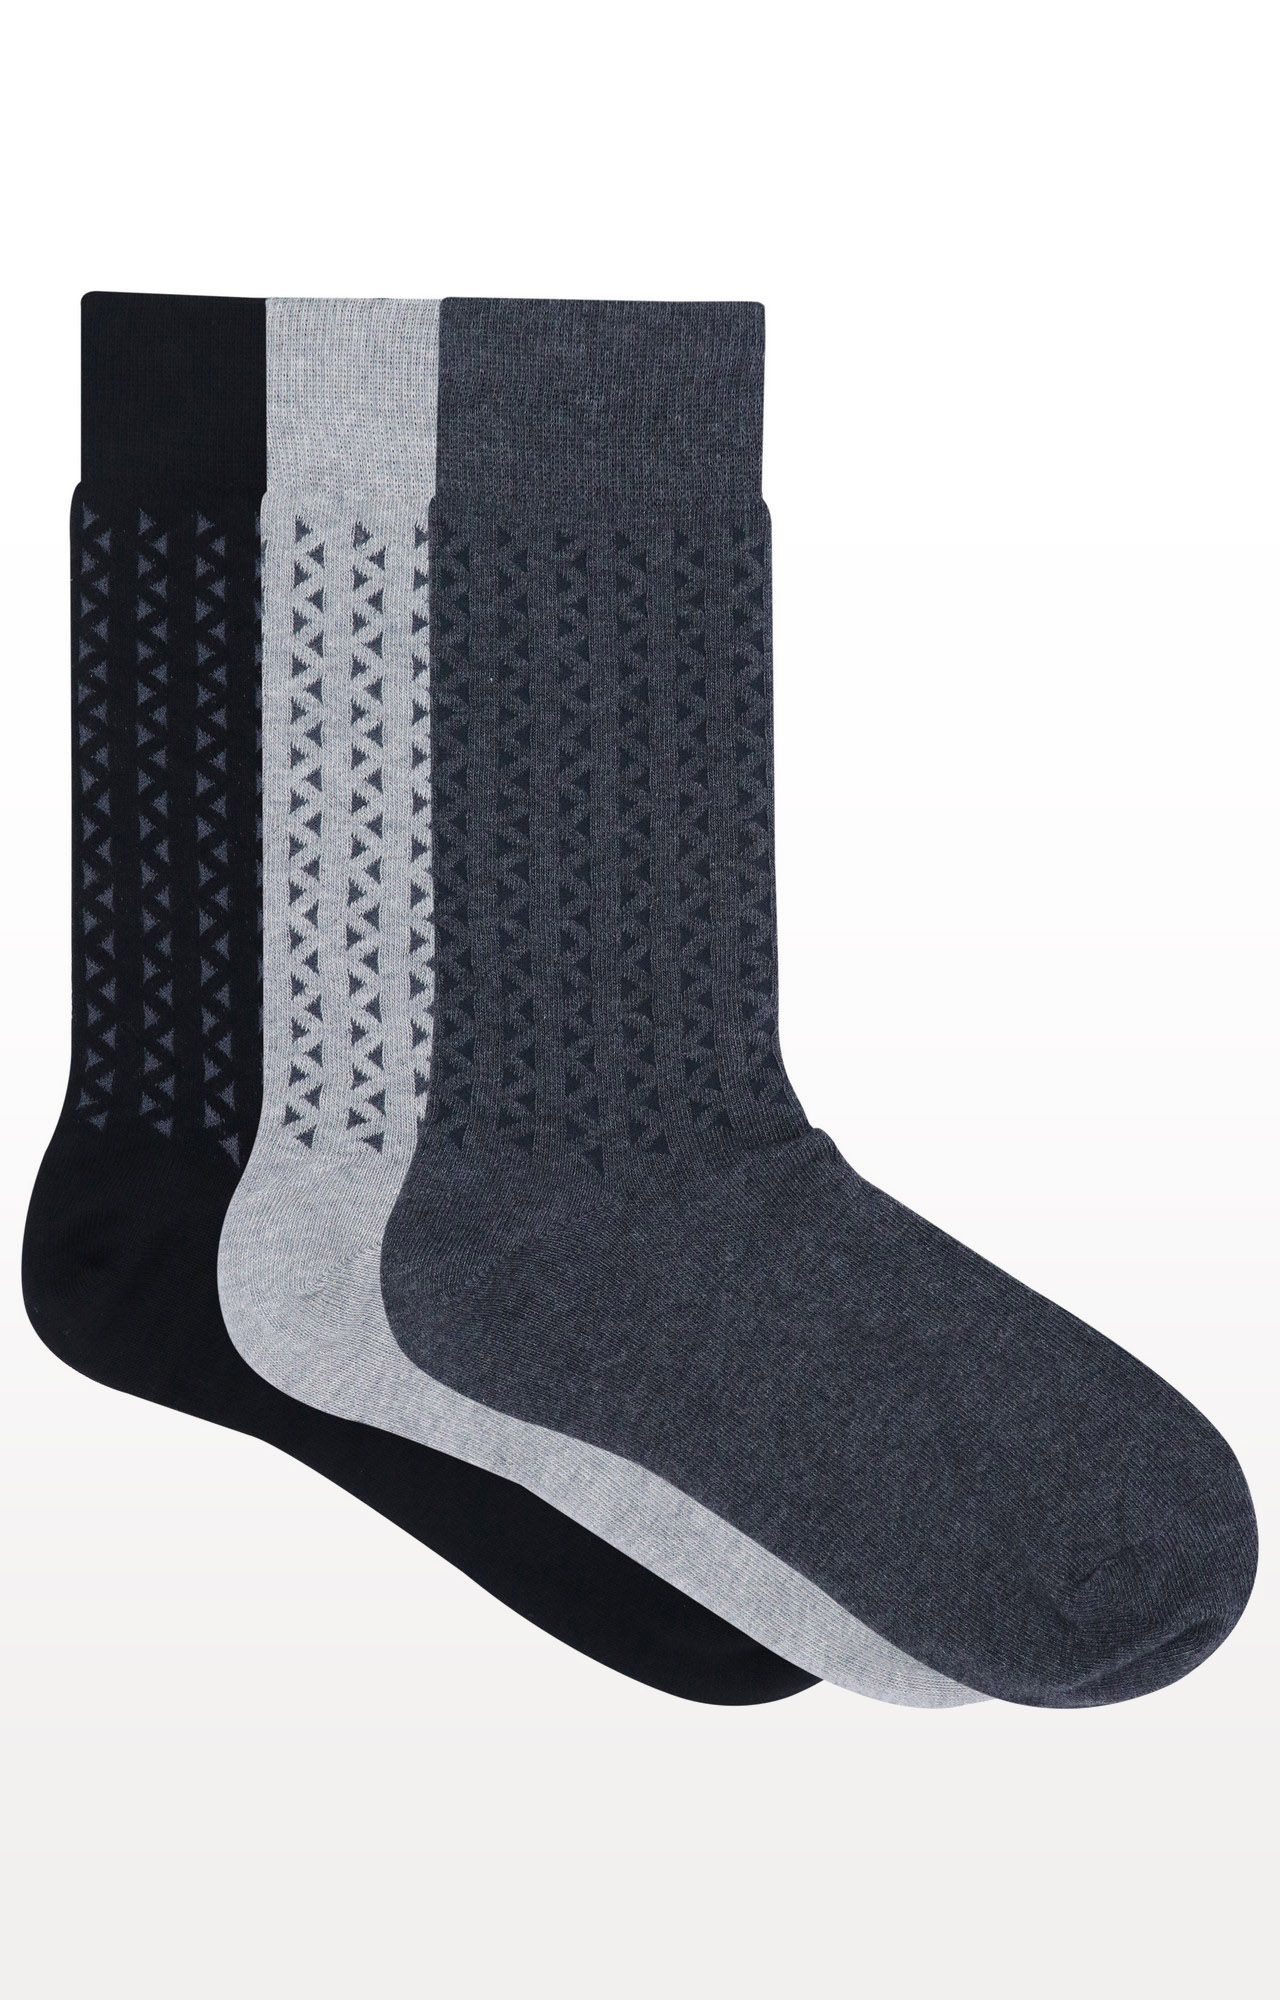 BALENZIA | Multi-Coloured Printed Socks (Pack of 3) 1